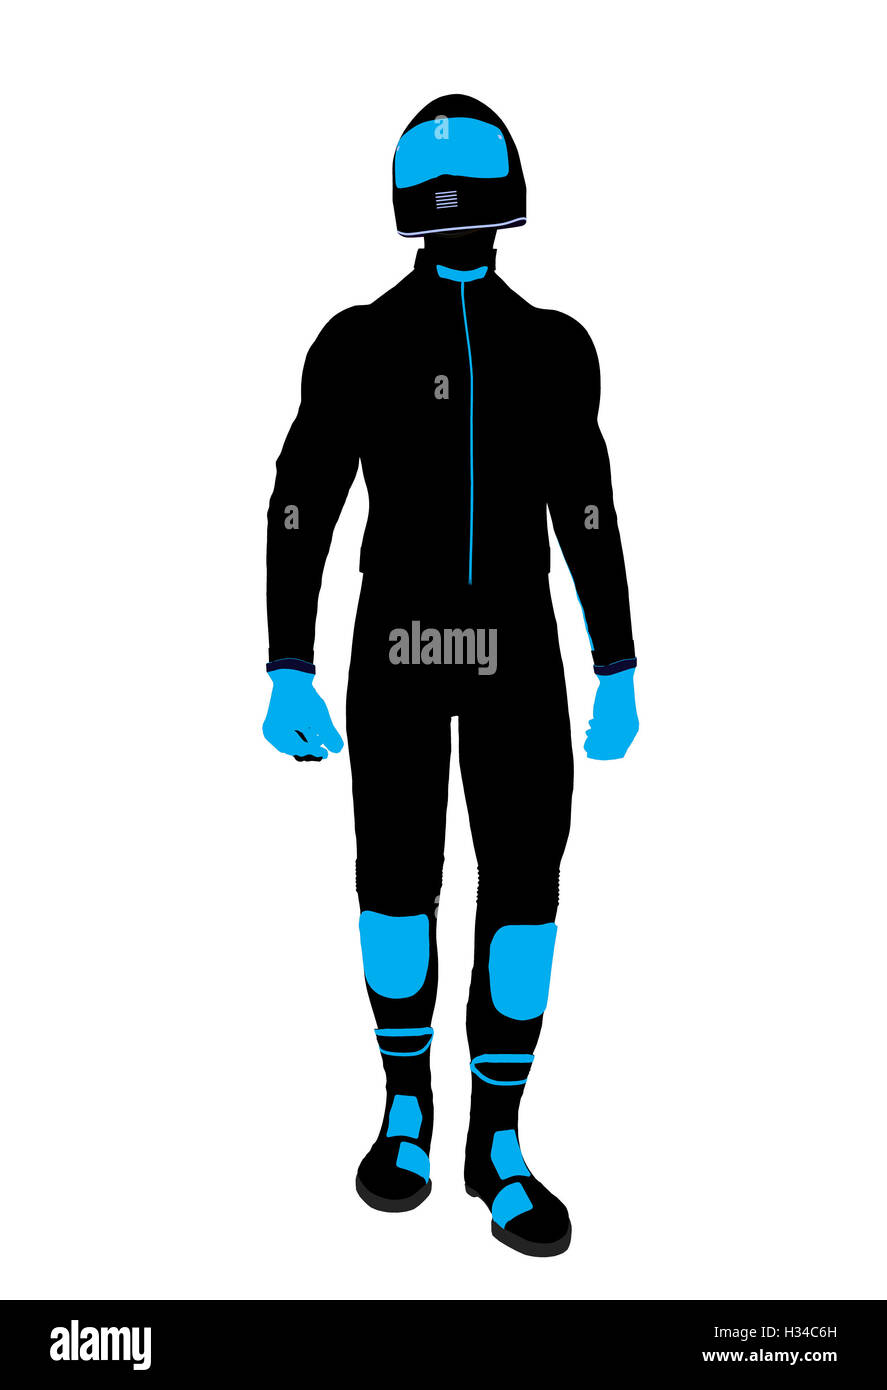 Male Sports Biker Illustration Silhouette Stock Photo